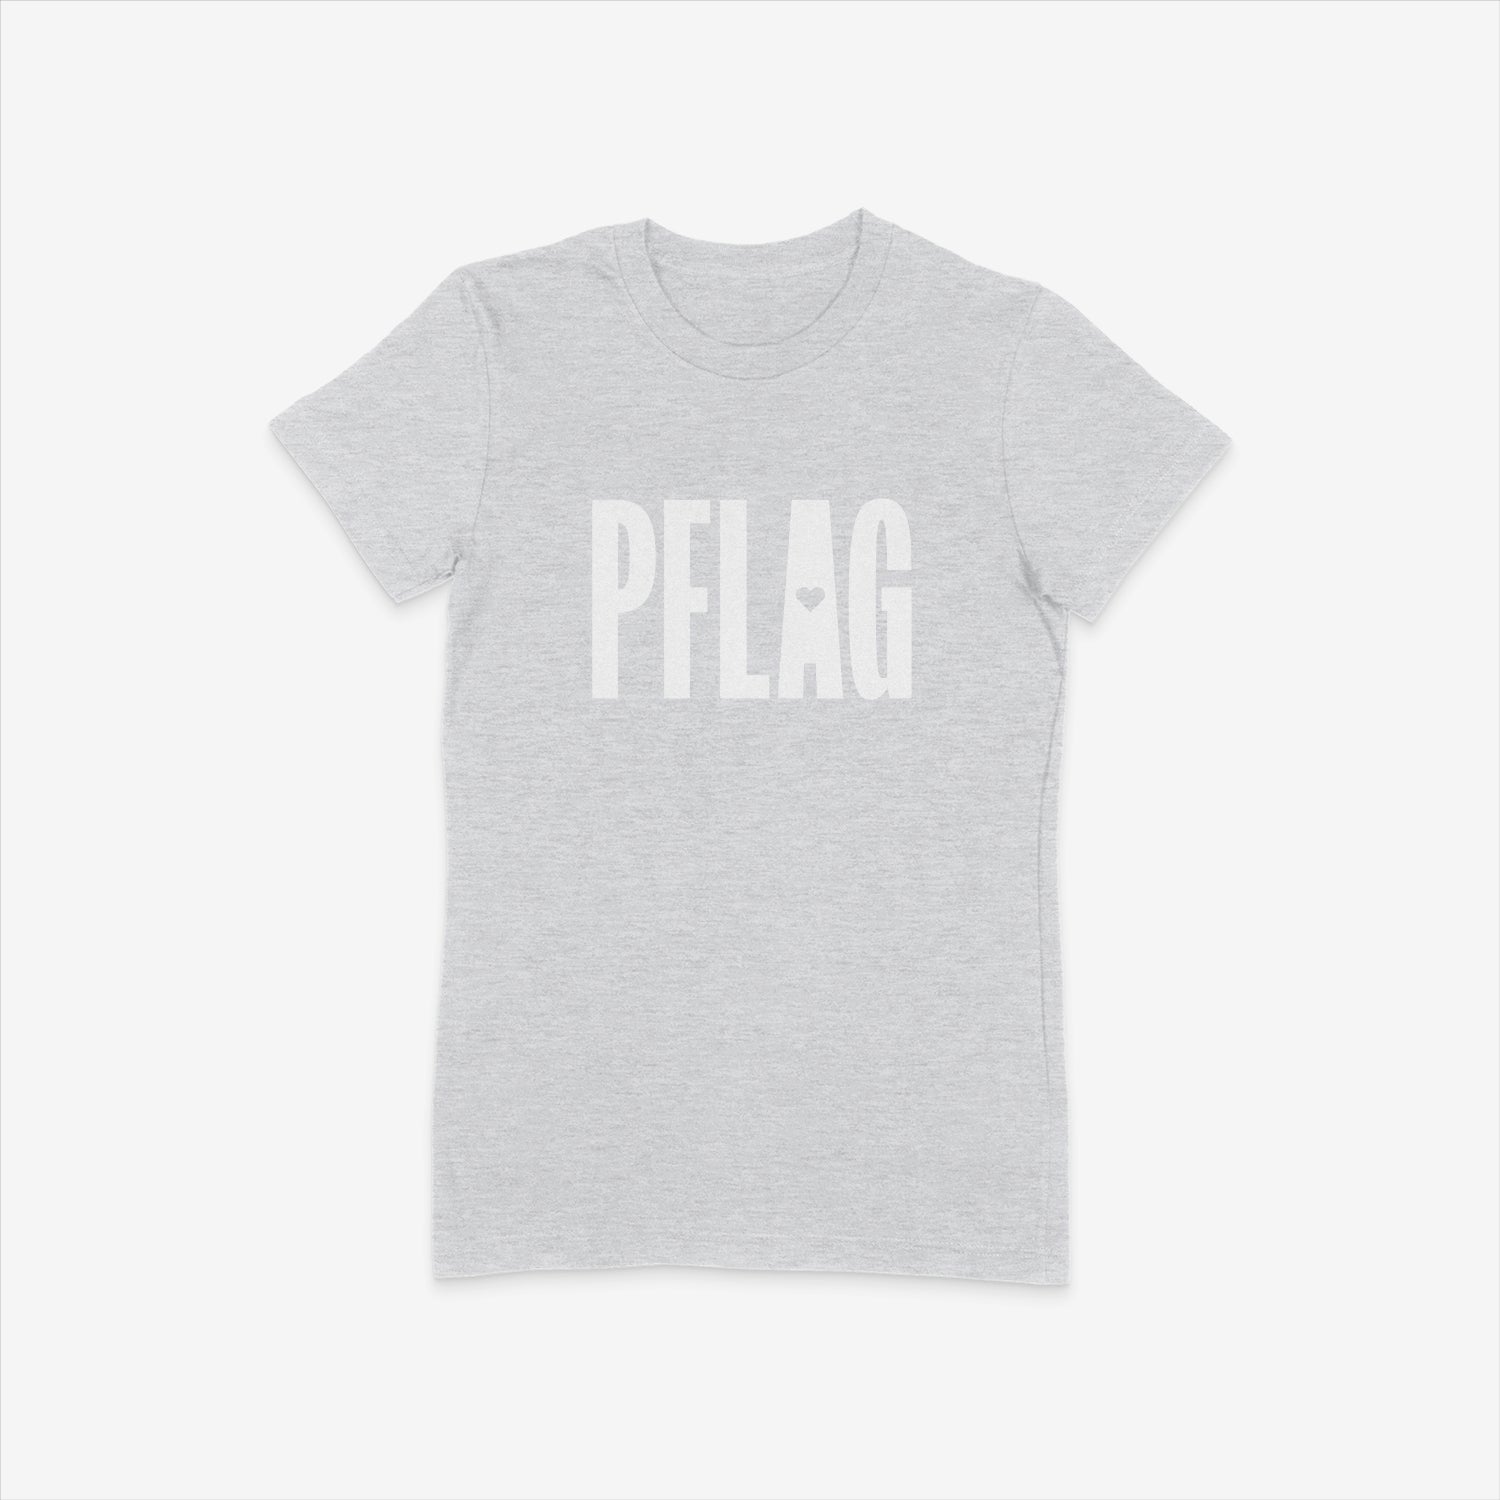 PFLAG Logo - Fitted-Cut Crewneck Short Sleeve T-Shirt